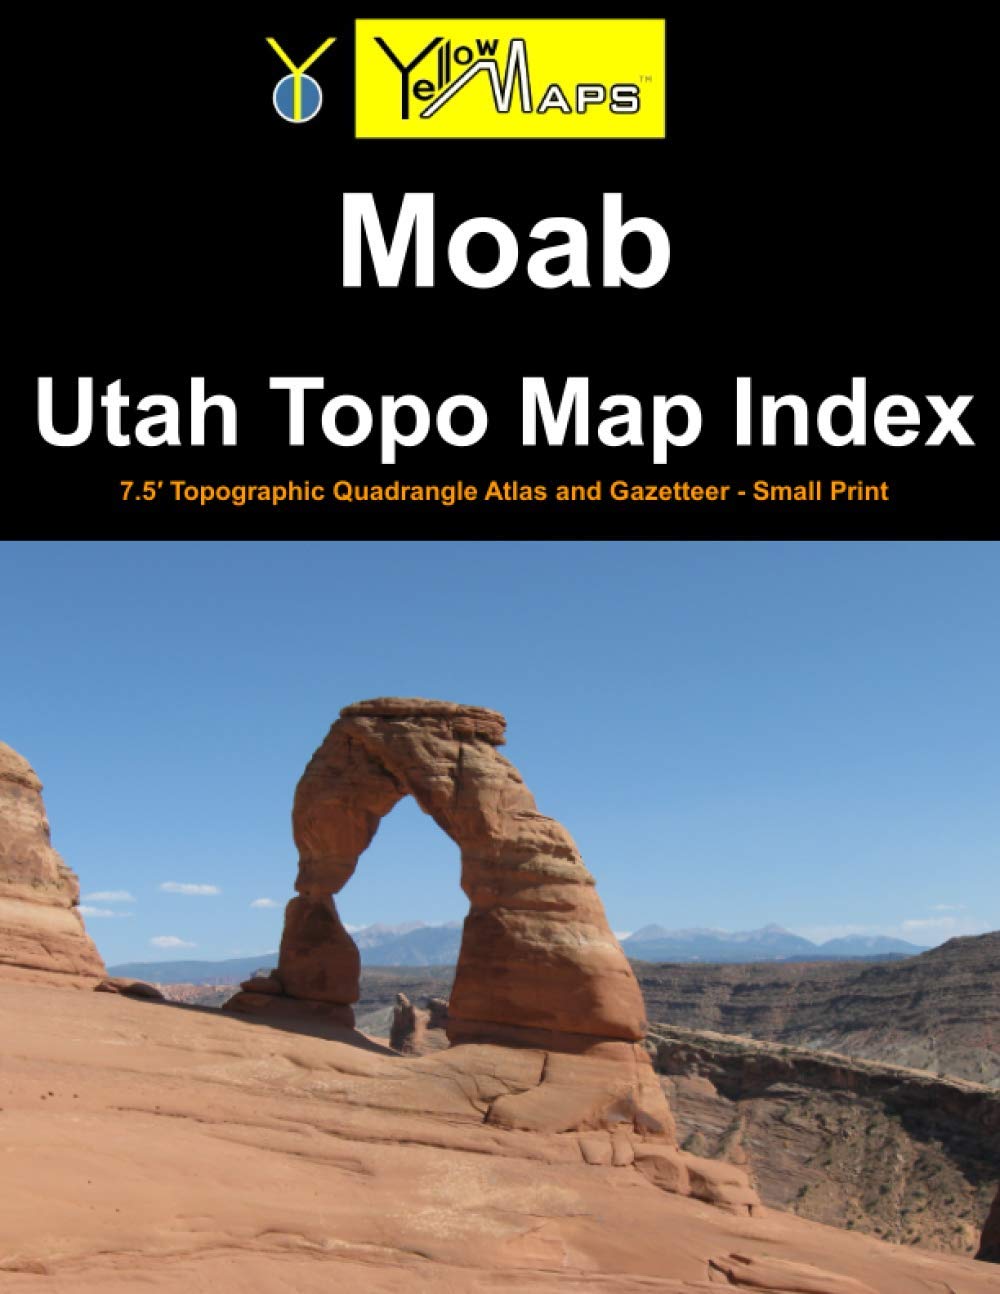 Paperback atlas: Moab Utah Topo Map Index